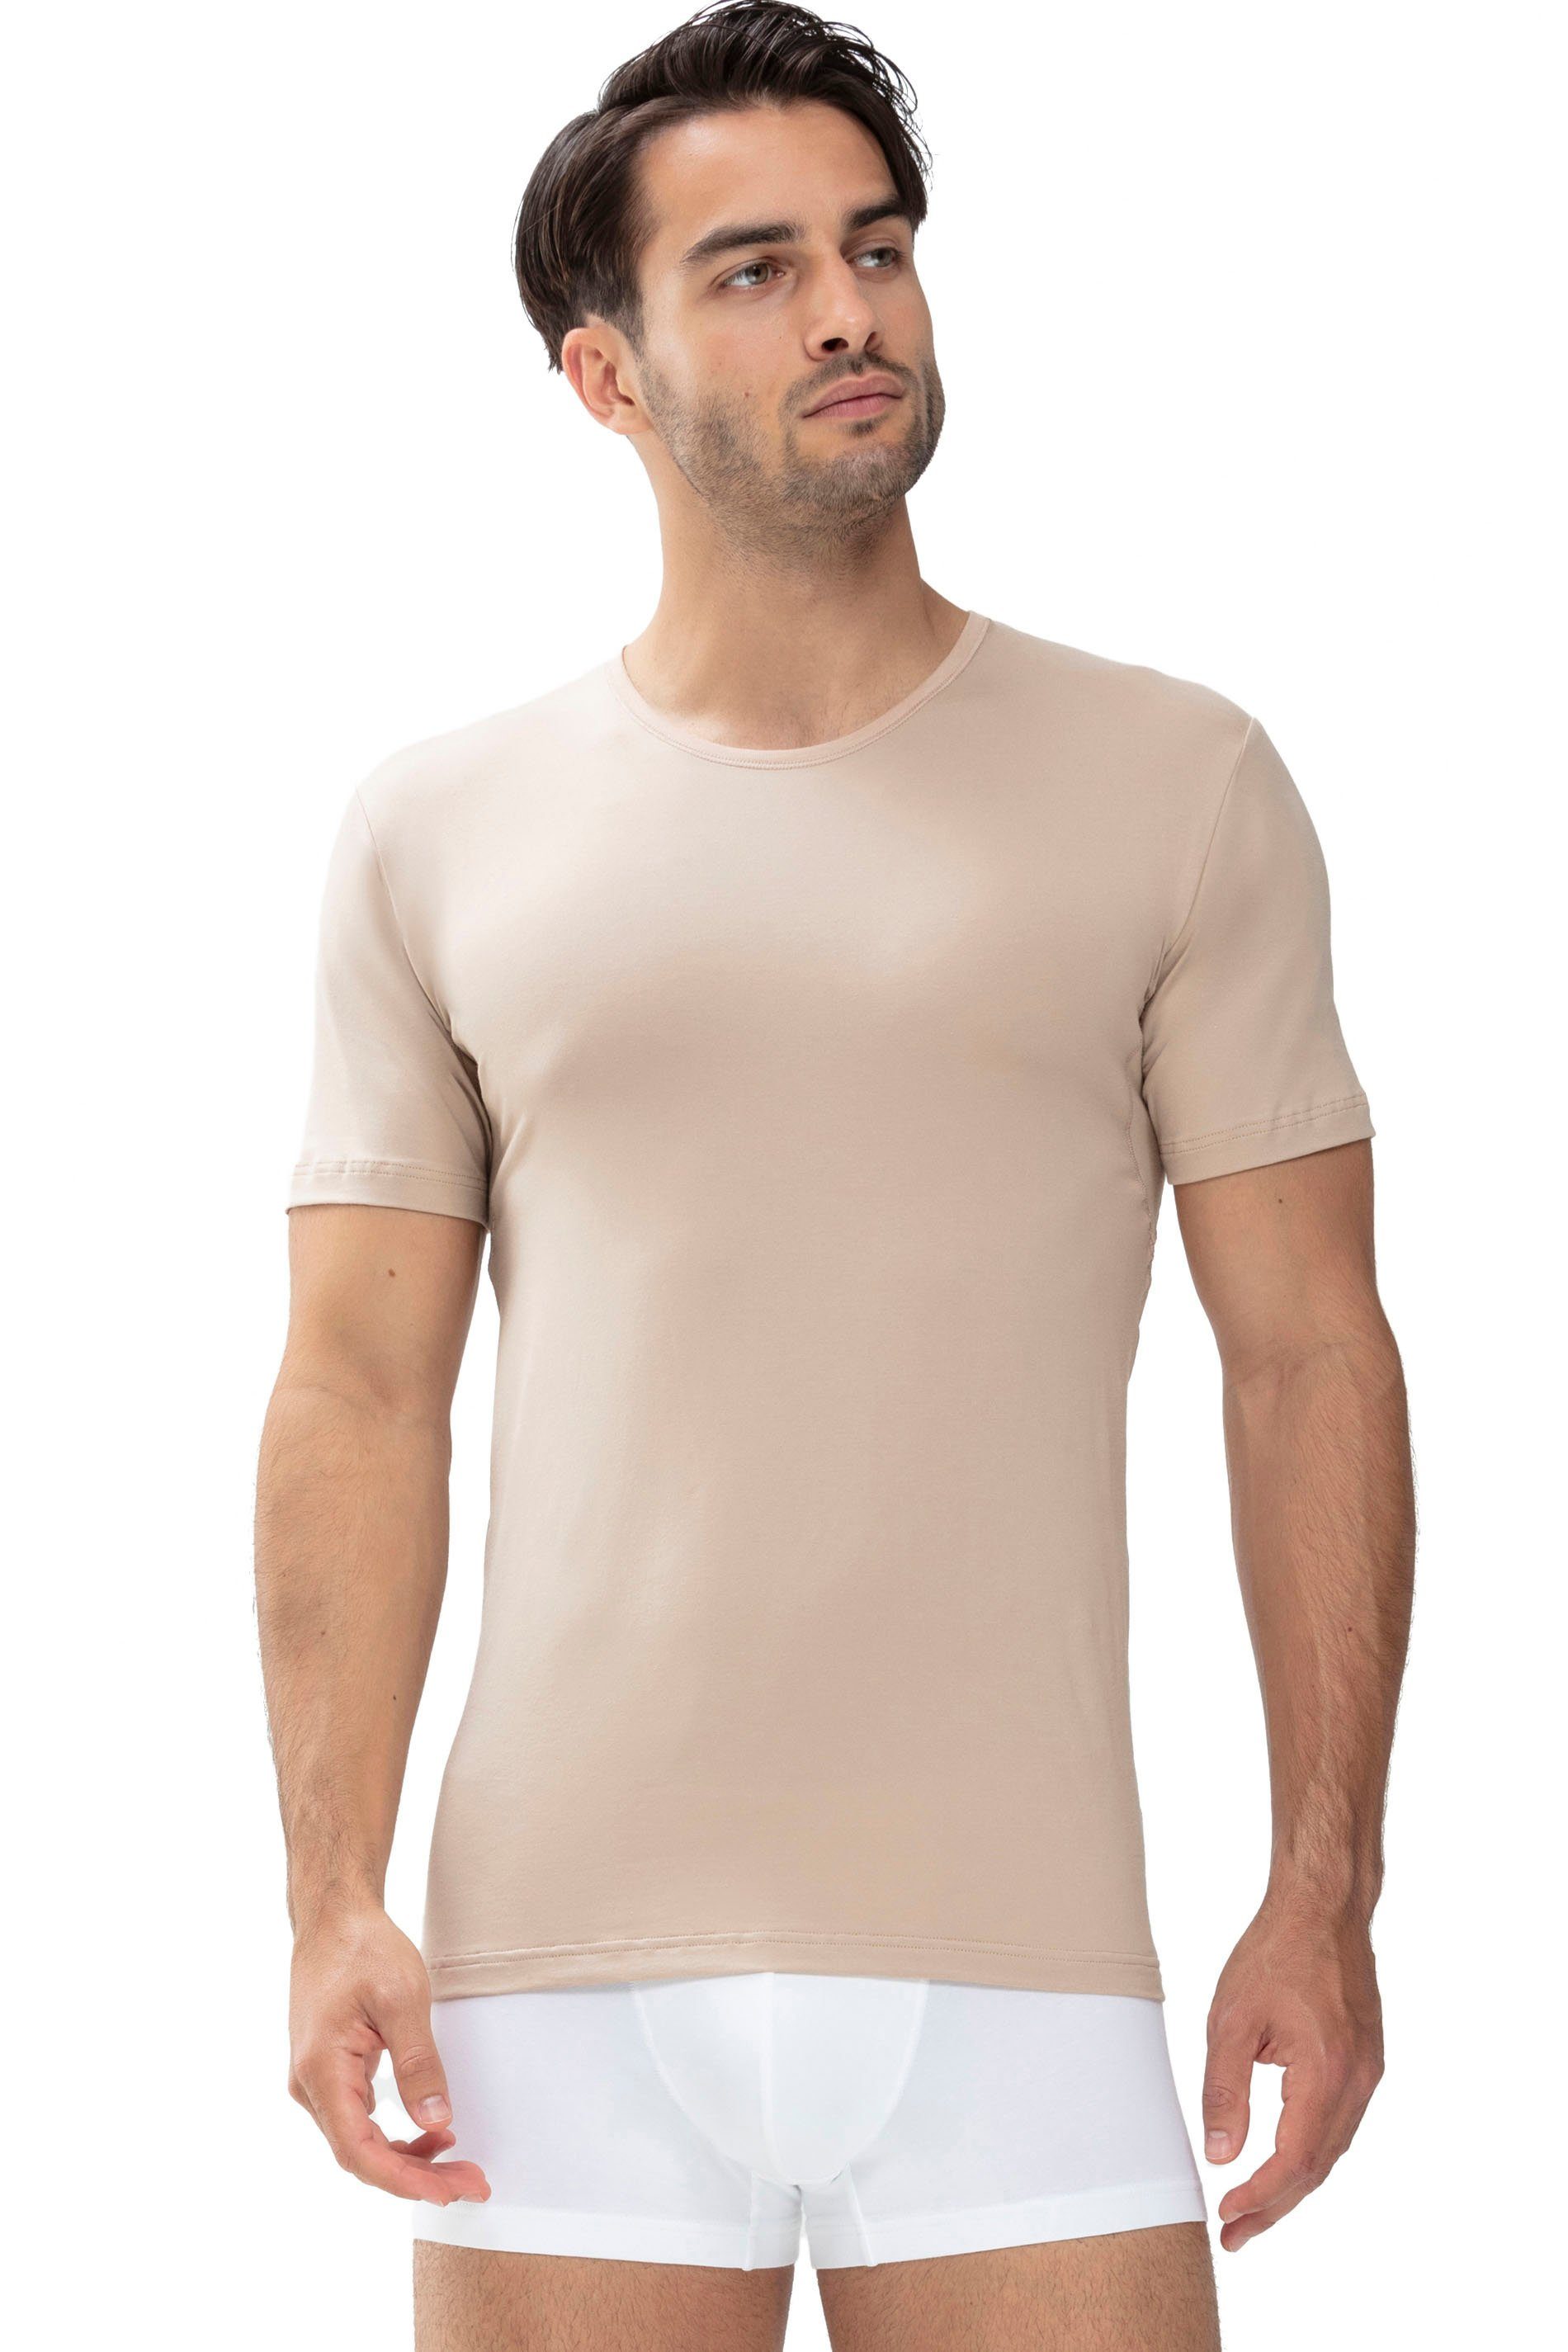 Mey Unterziehshirt Dry Cotton Functional unter dem Businesshemd unsichtbar, Halbarm Light-Beige | Unterhemden